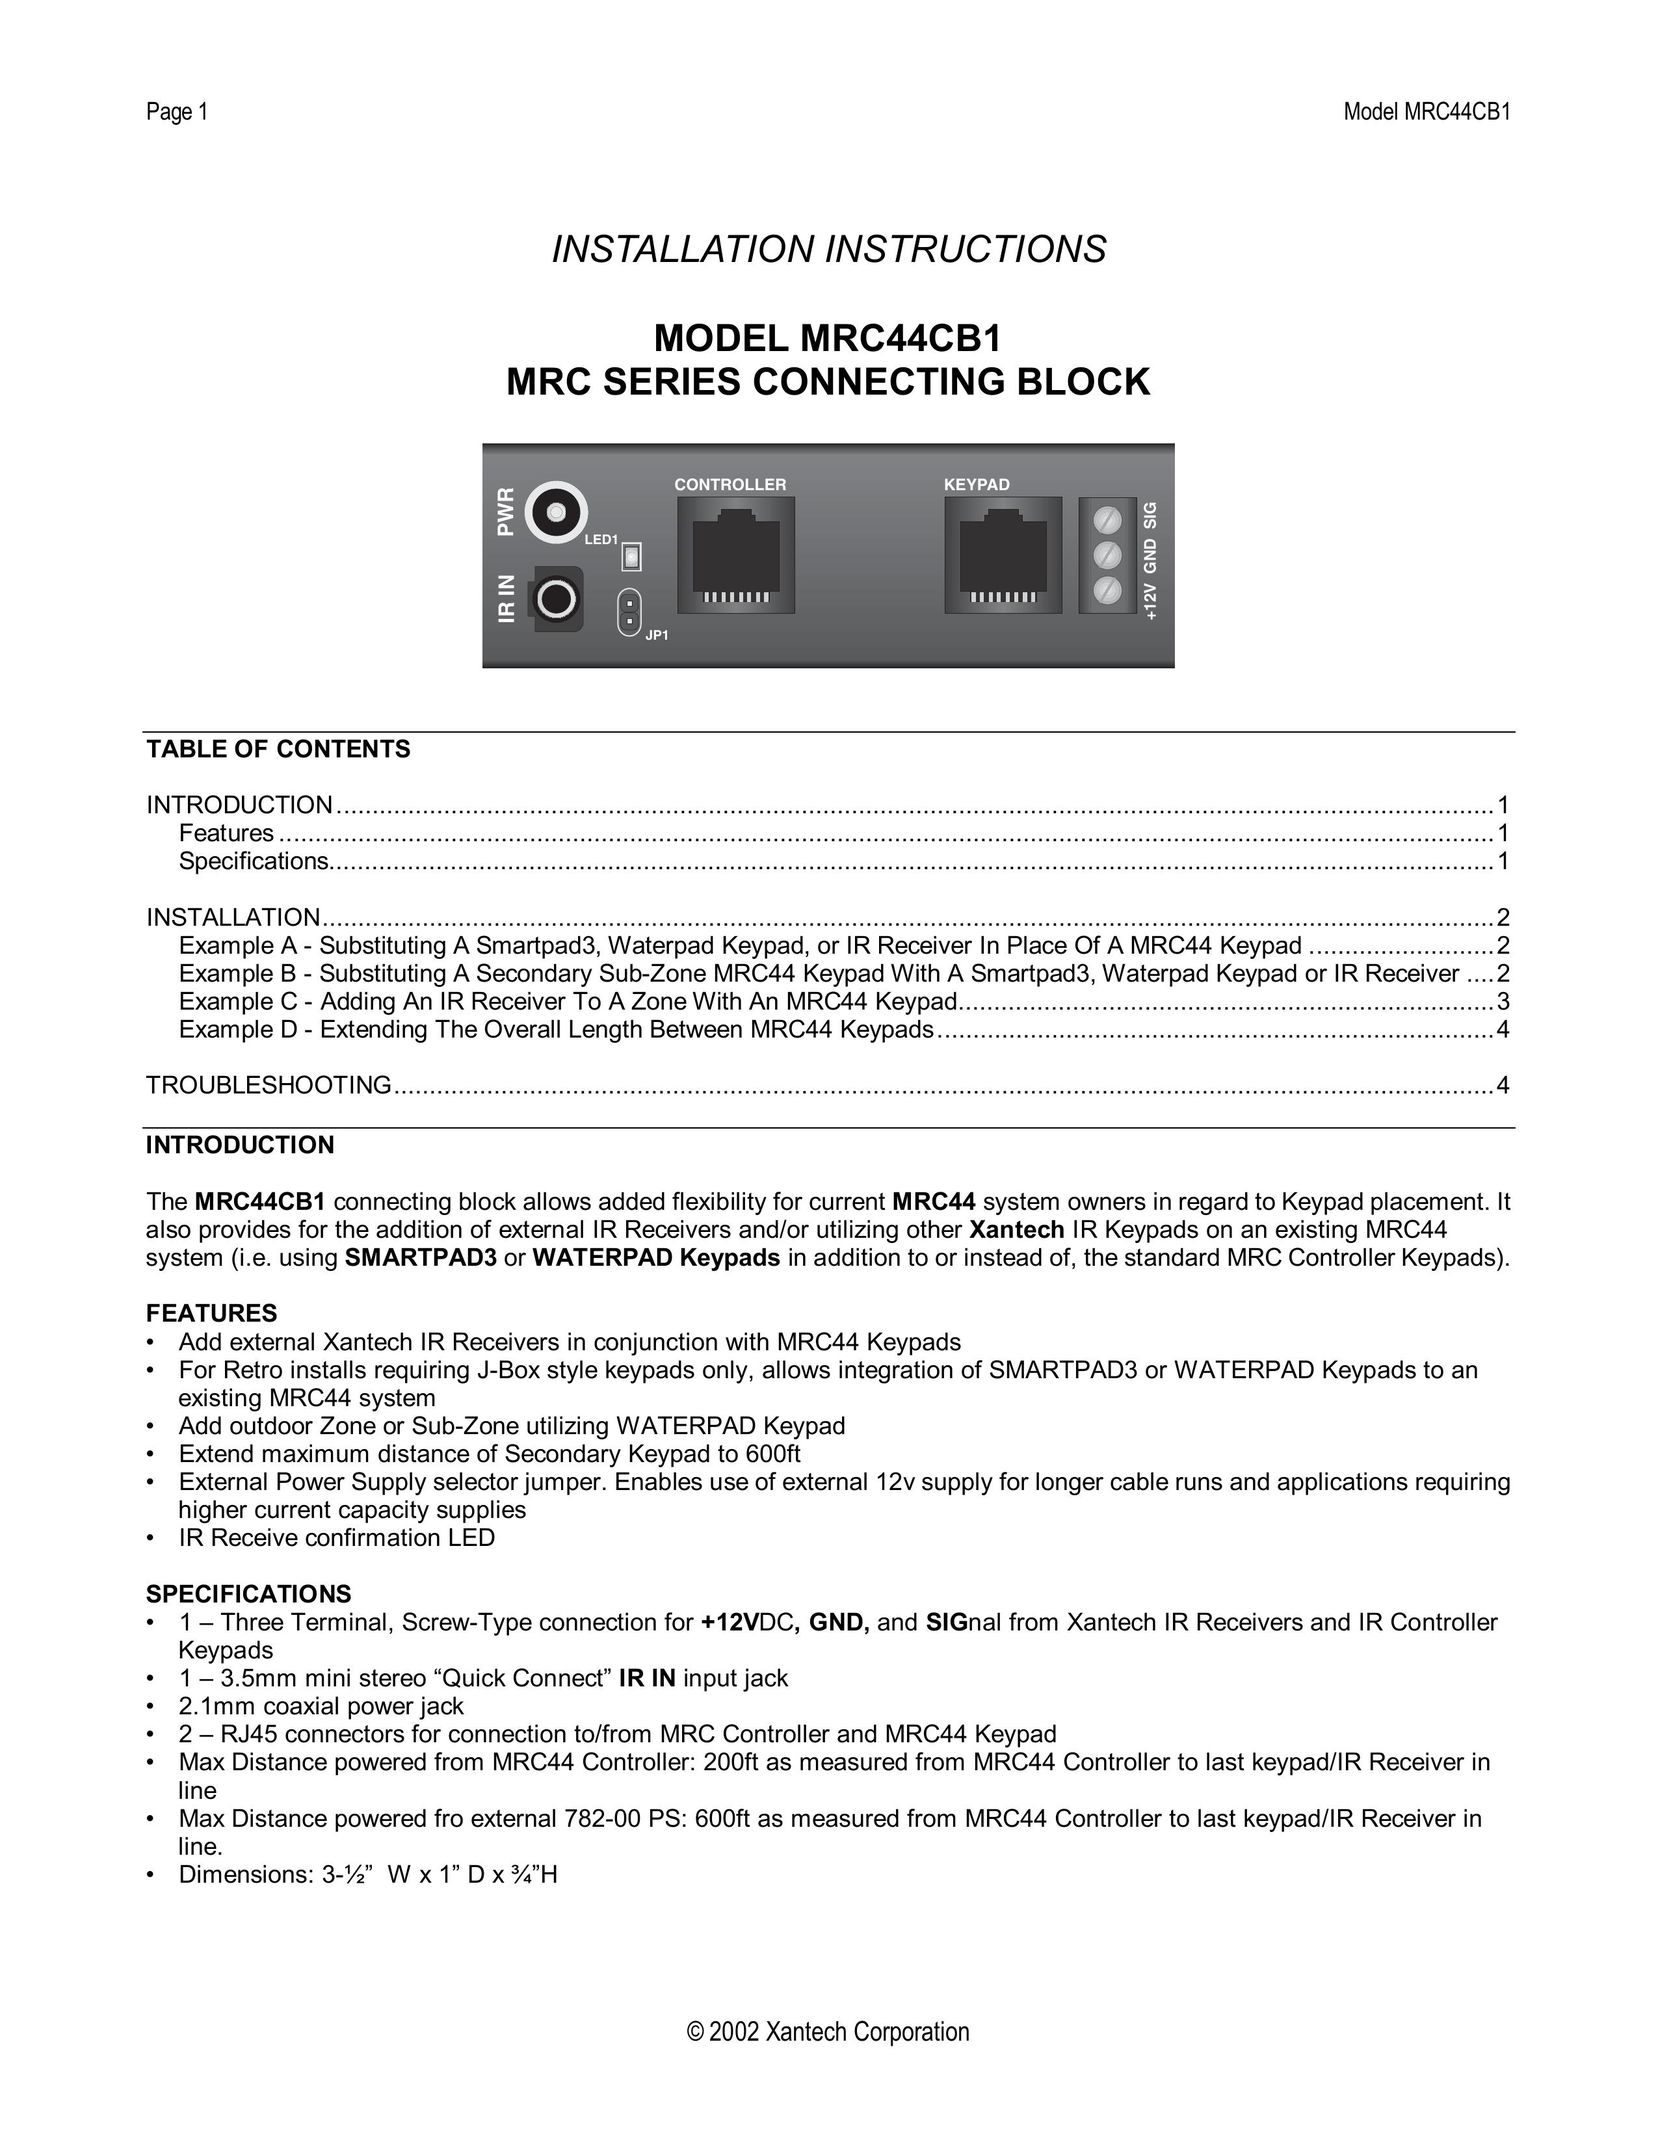 Xantech MRC44CB1 Network Card User Manual